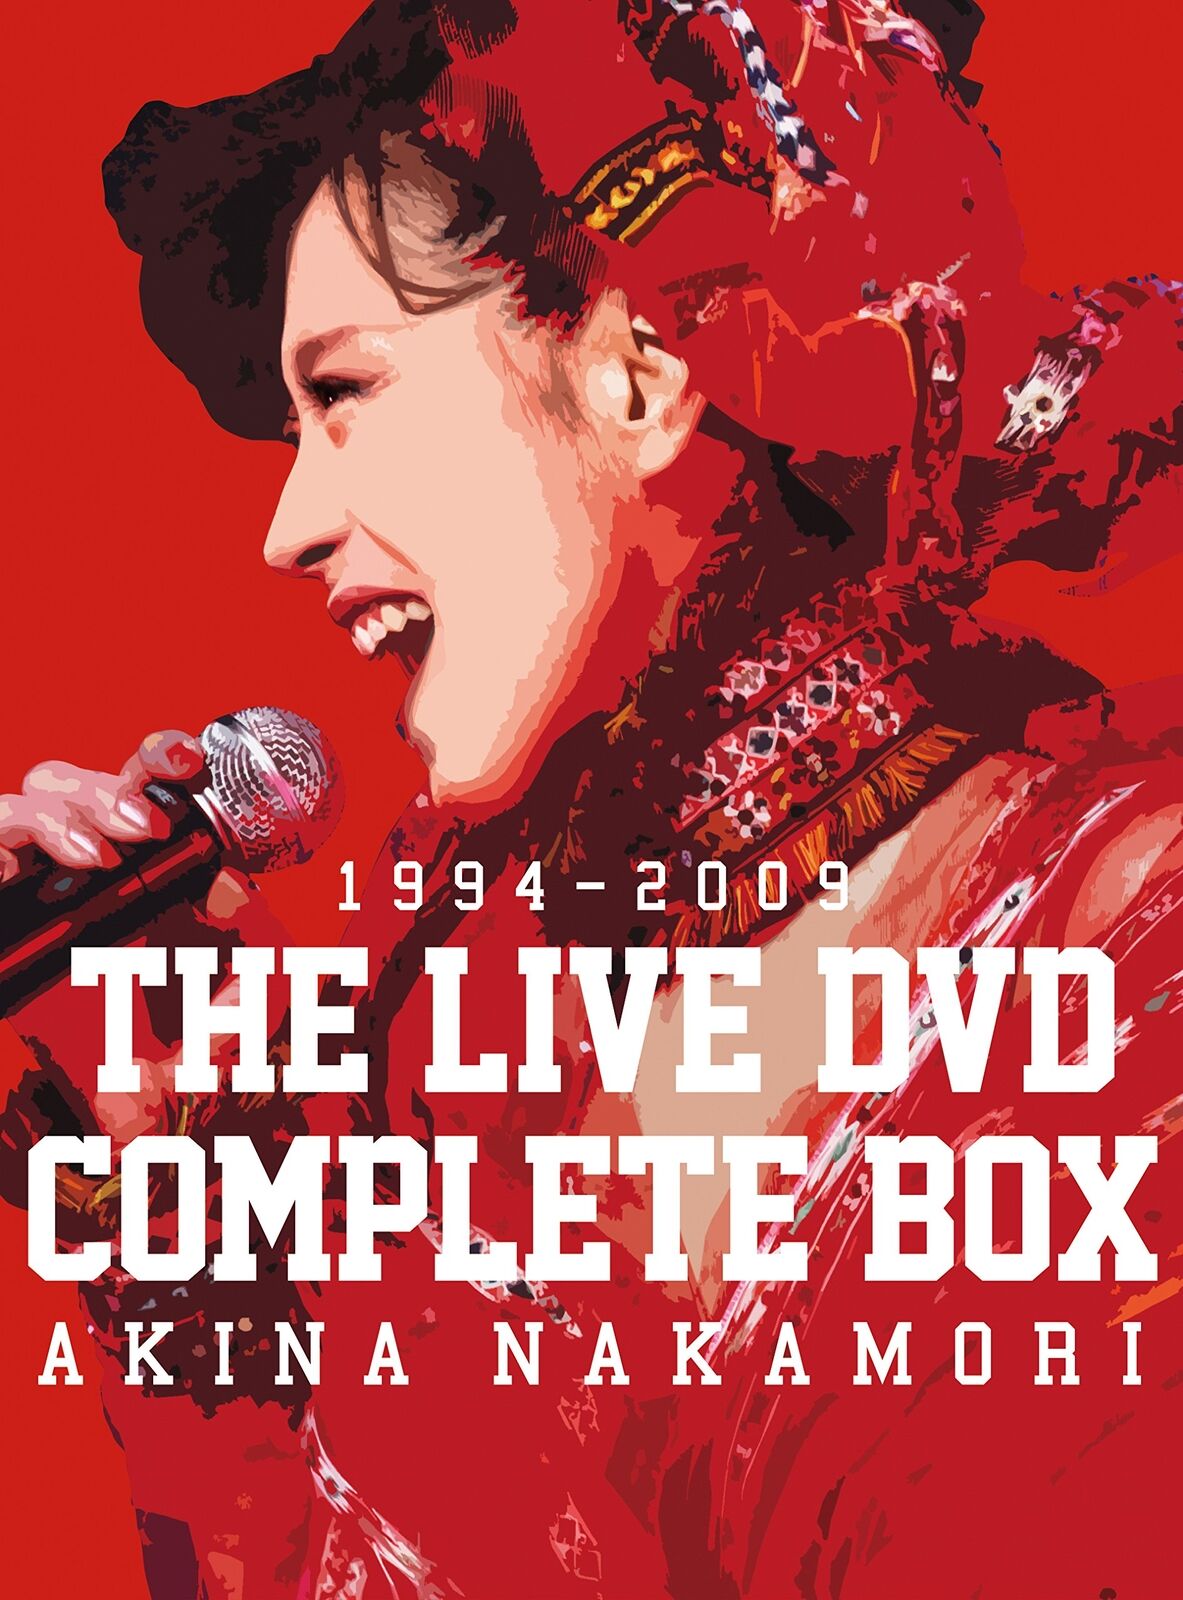 Universal Music Akina Nakamori The Live DVD Complete Box Made in Japan